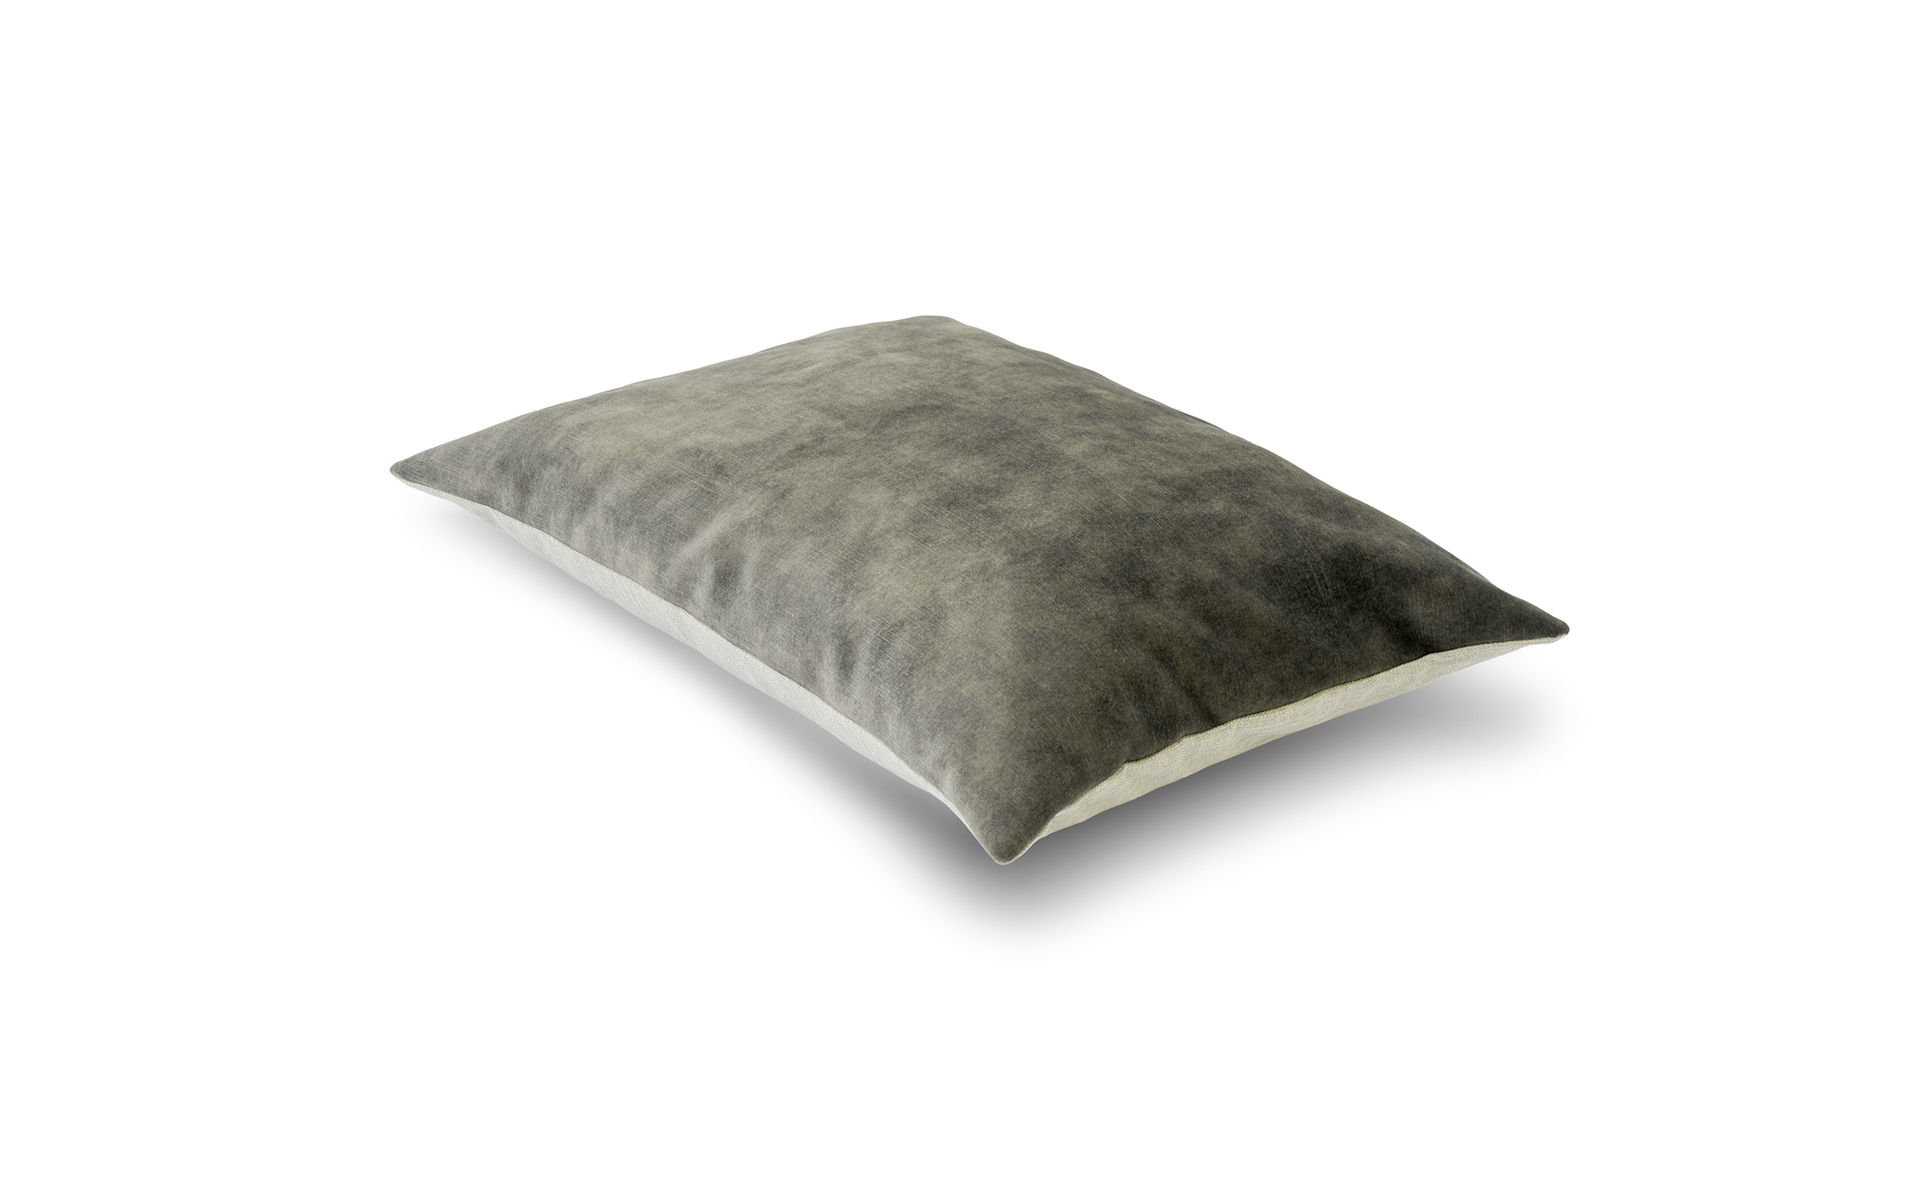 MrsMe cushion Porter Evergreen 1920x1200